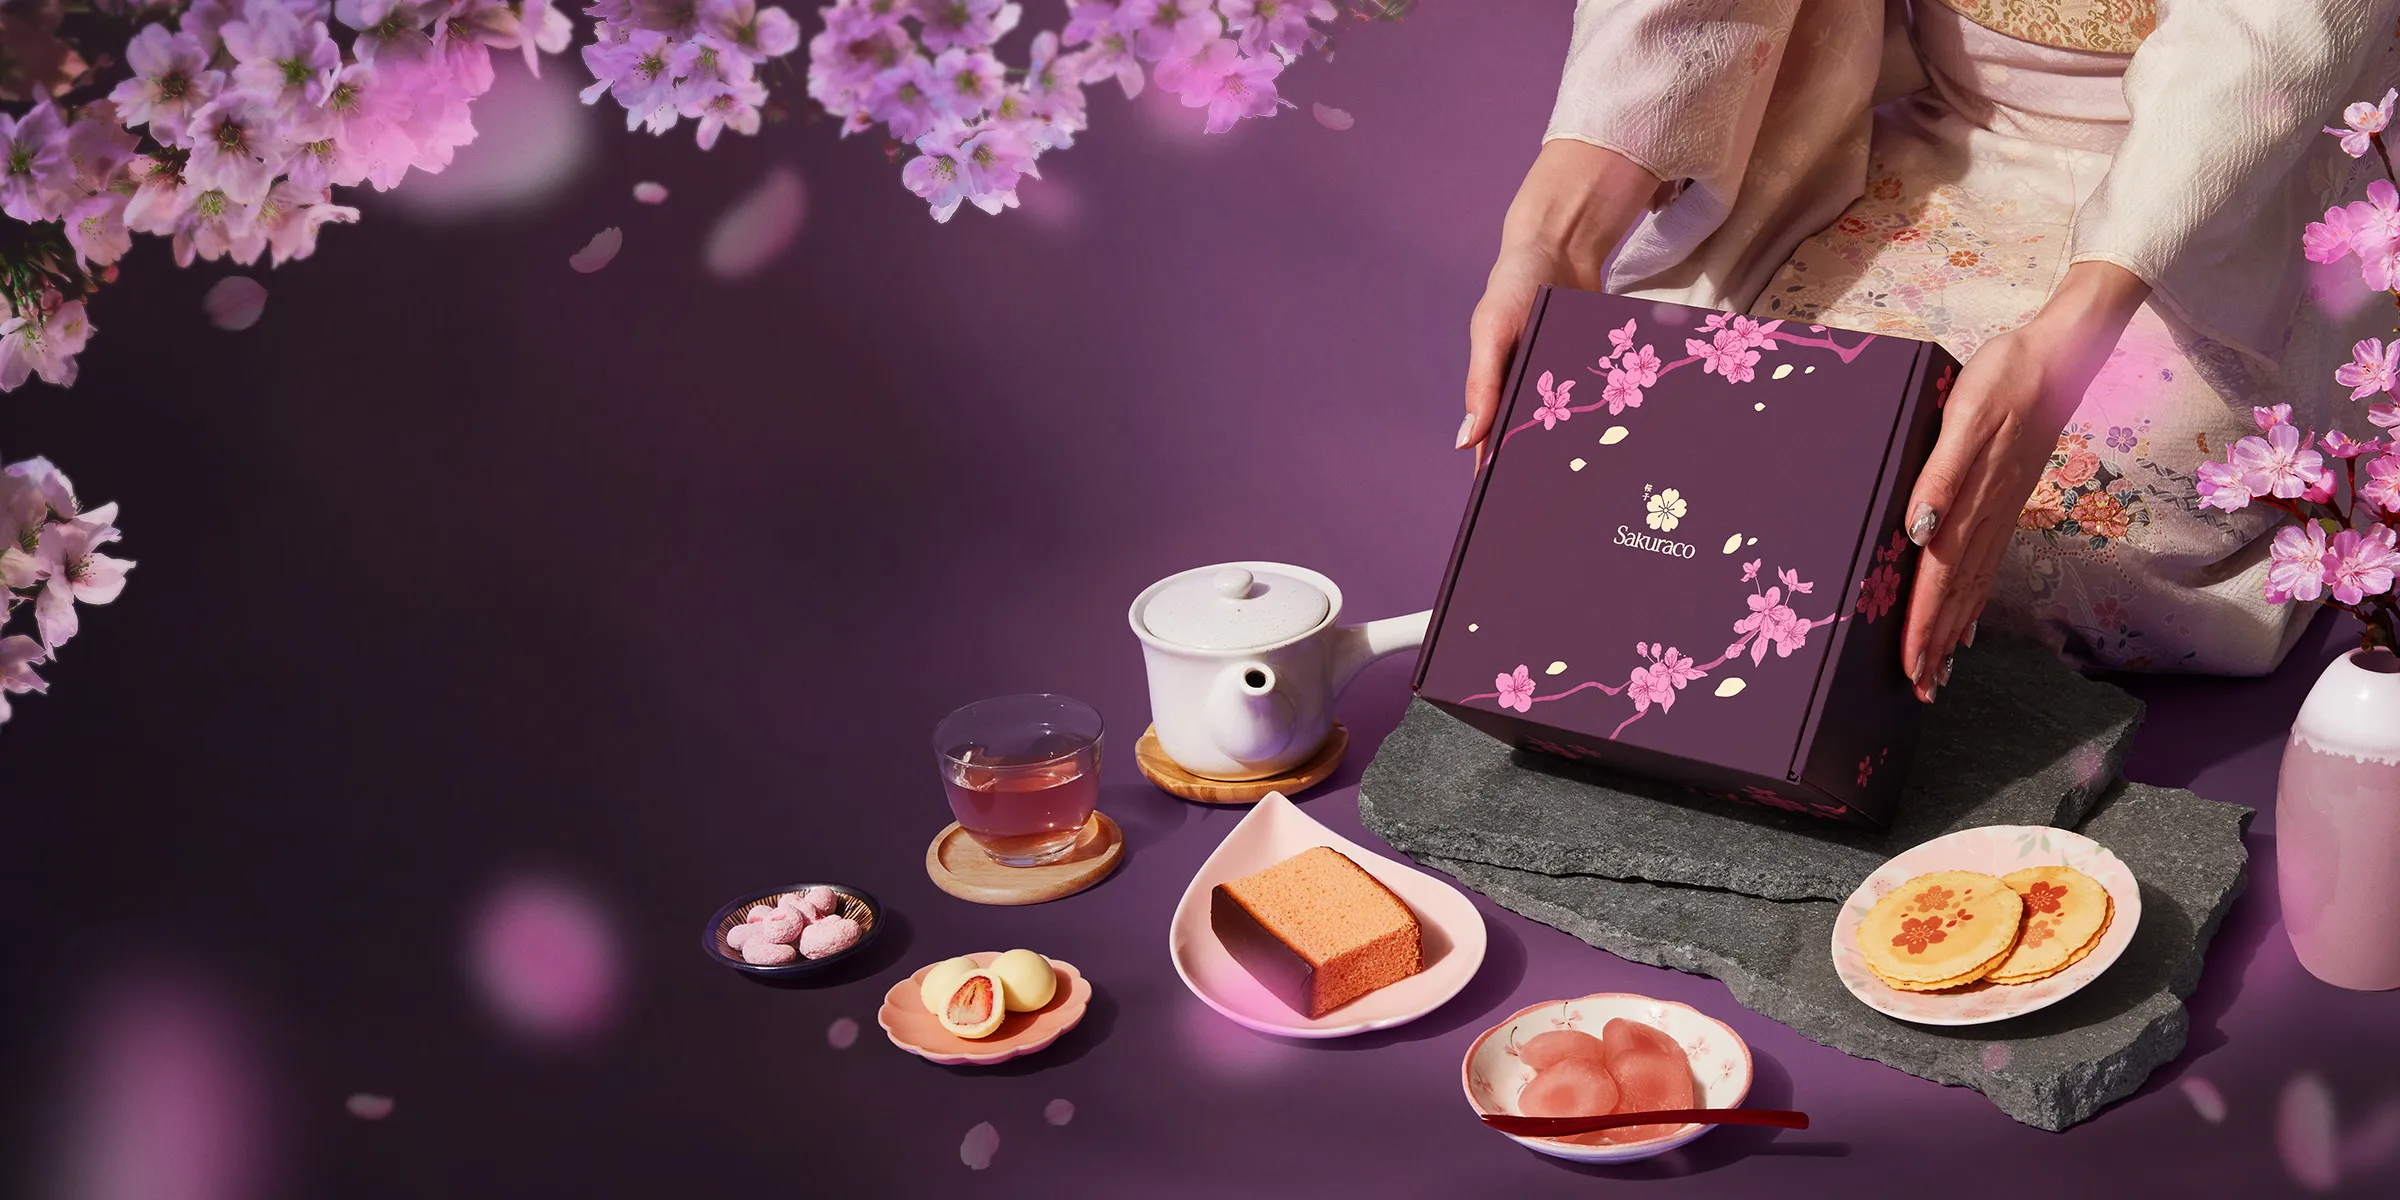 Sakuraco's April Box: A Night of Sakura displayed with Japanese snacks and sweets